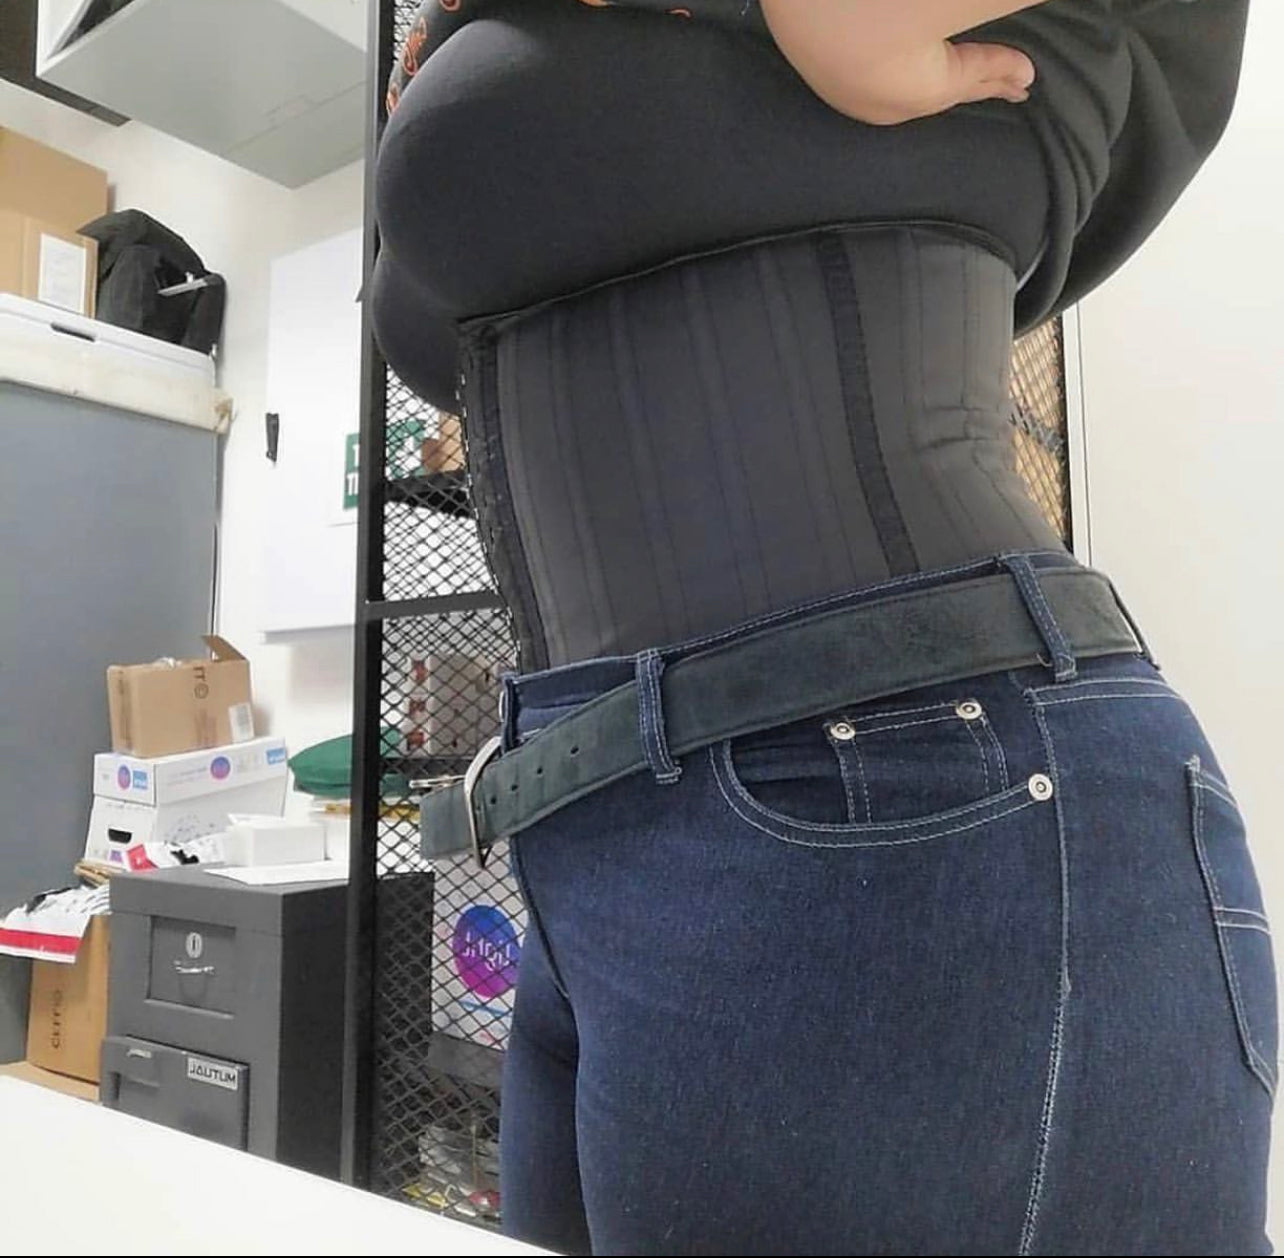 25 Steel Bone' Latex corset – Bodied By Vira